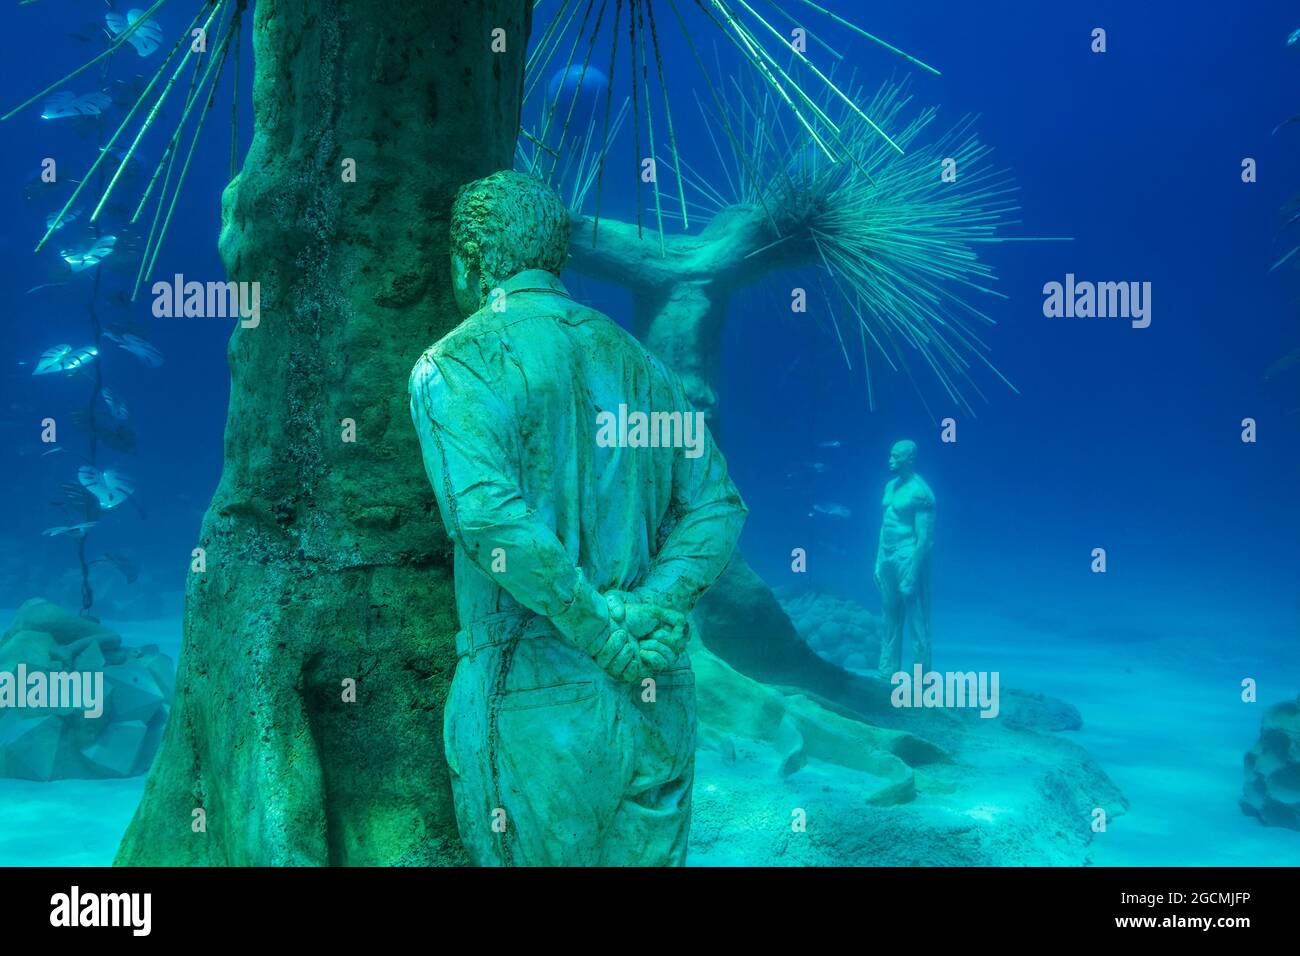 Cyprus's underwater sculpture park offers a deep dive into aquatic art,  KNEWS